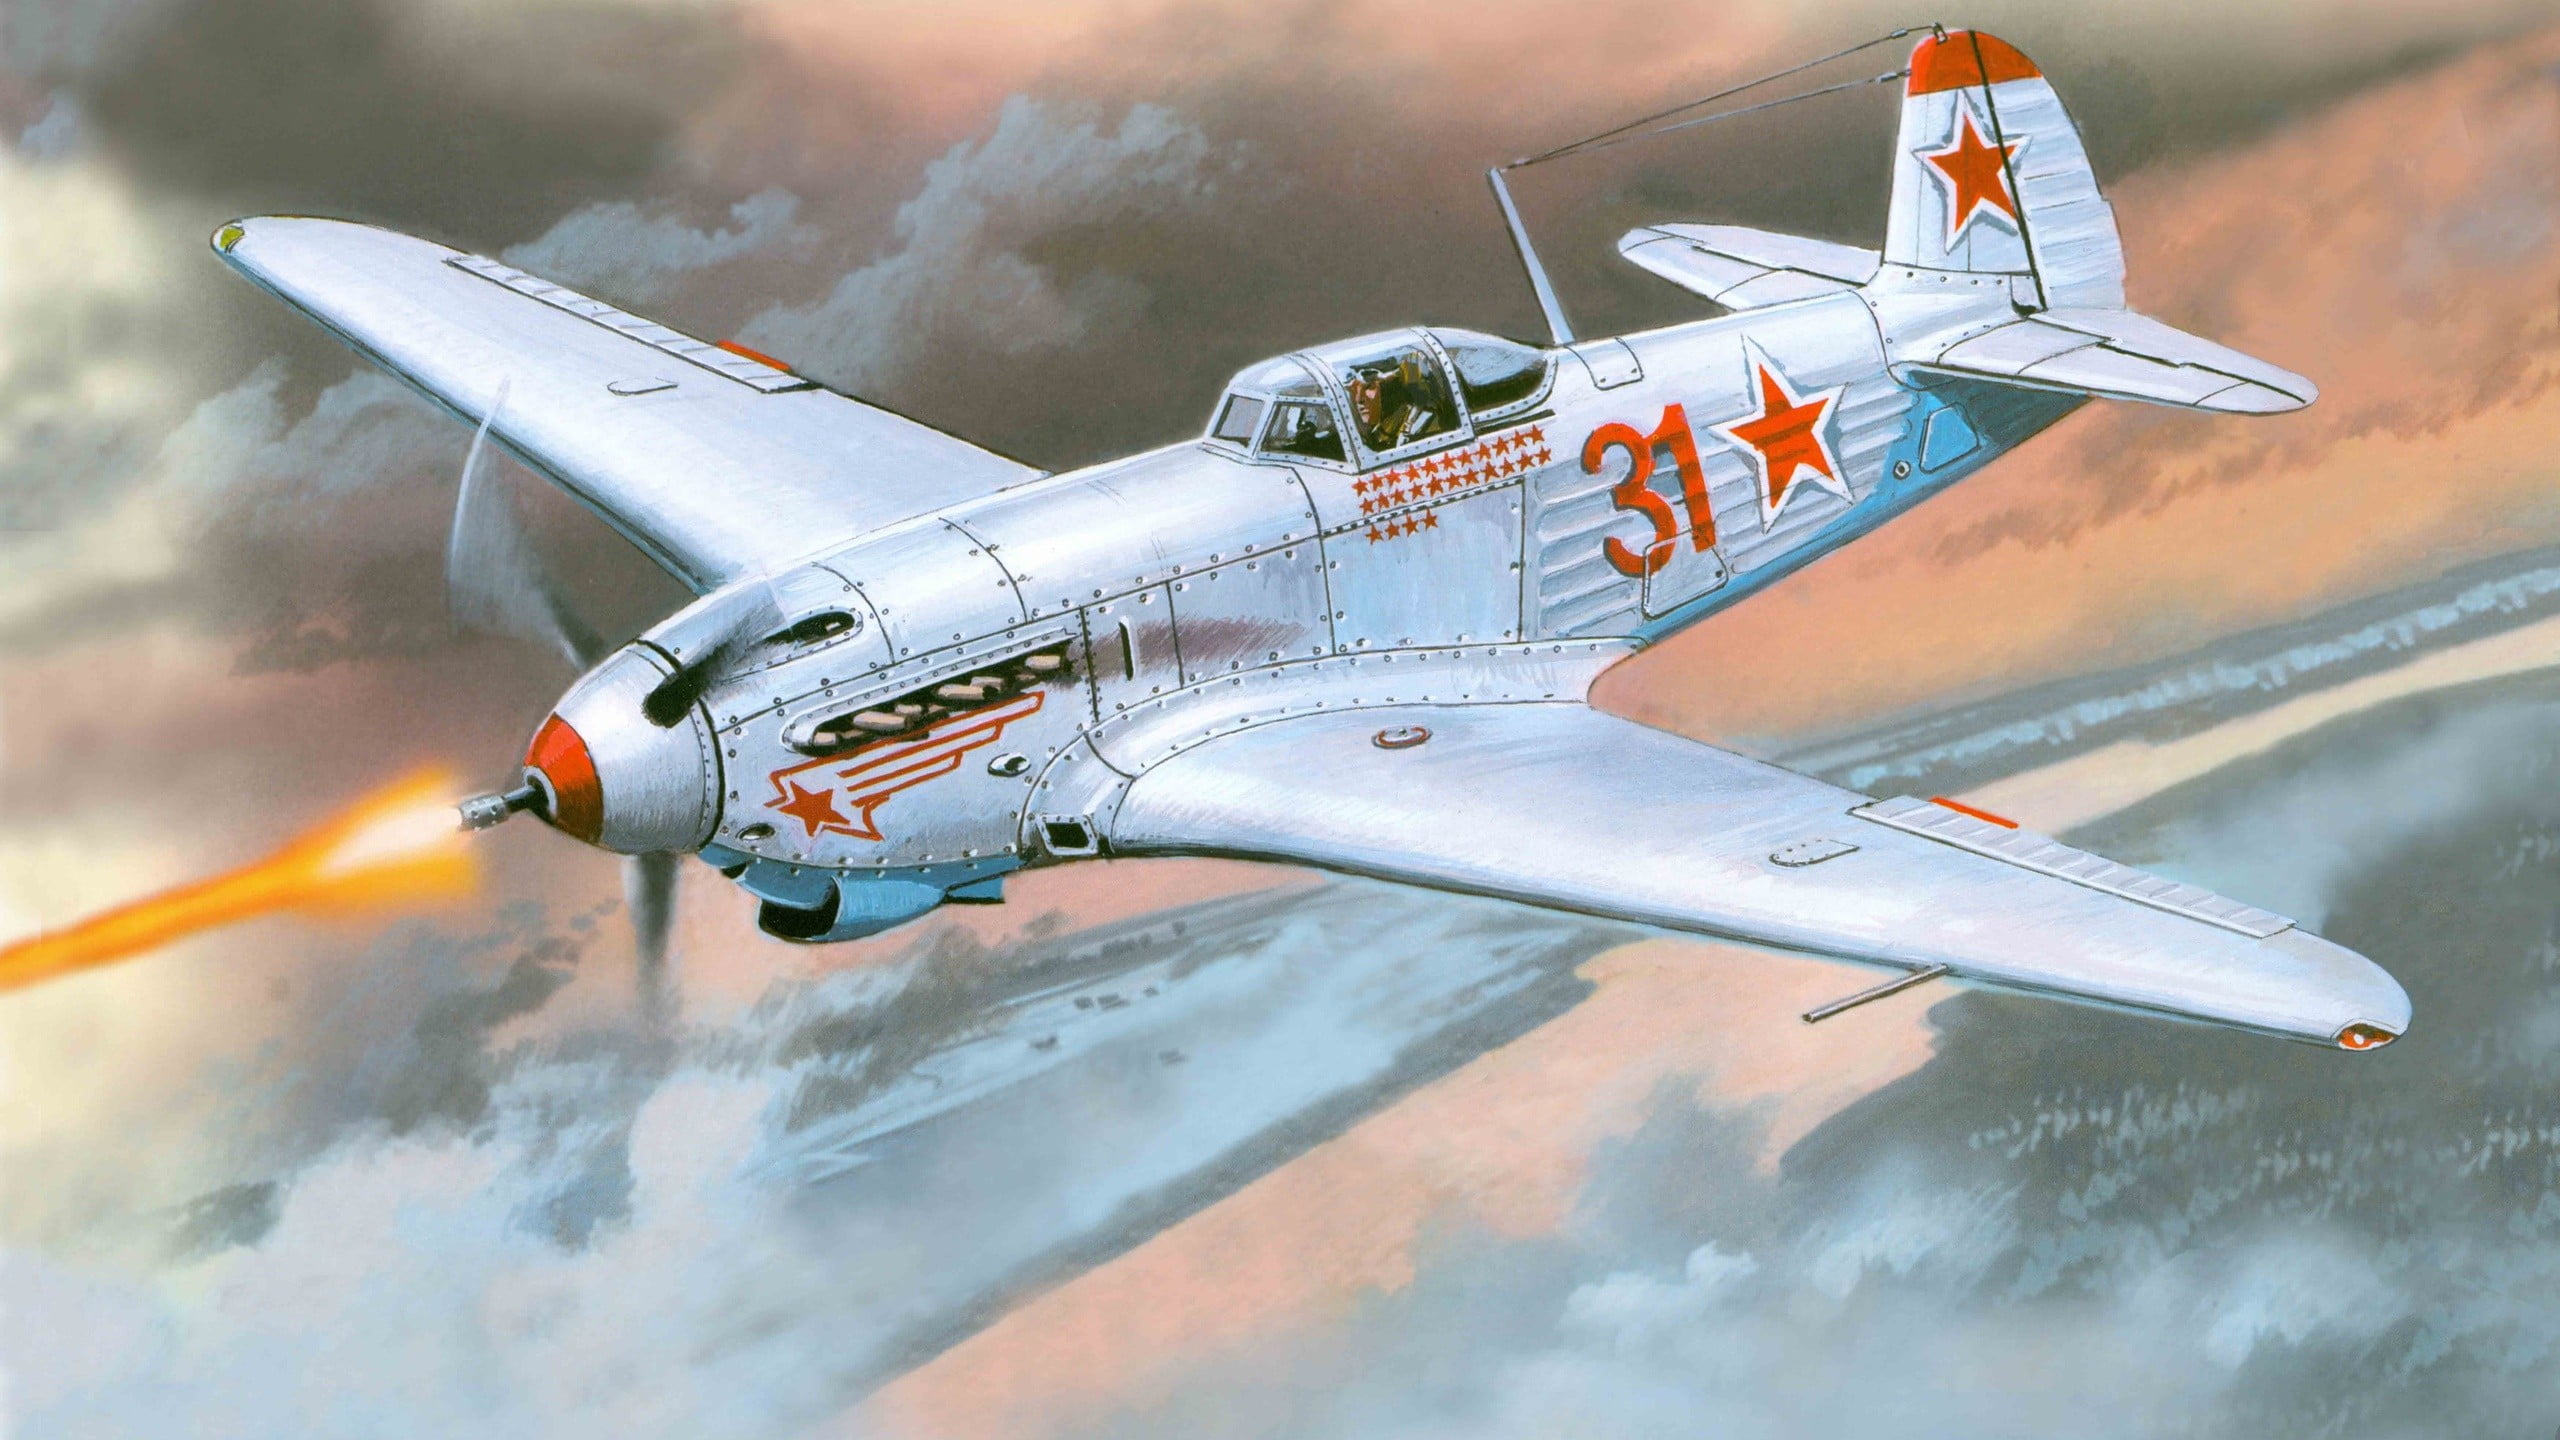 gray fighting plane illustration, army, Yakolev Yak-9K, Soviet Air Forces, military aircraft